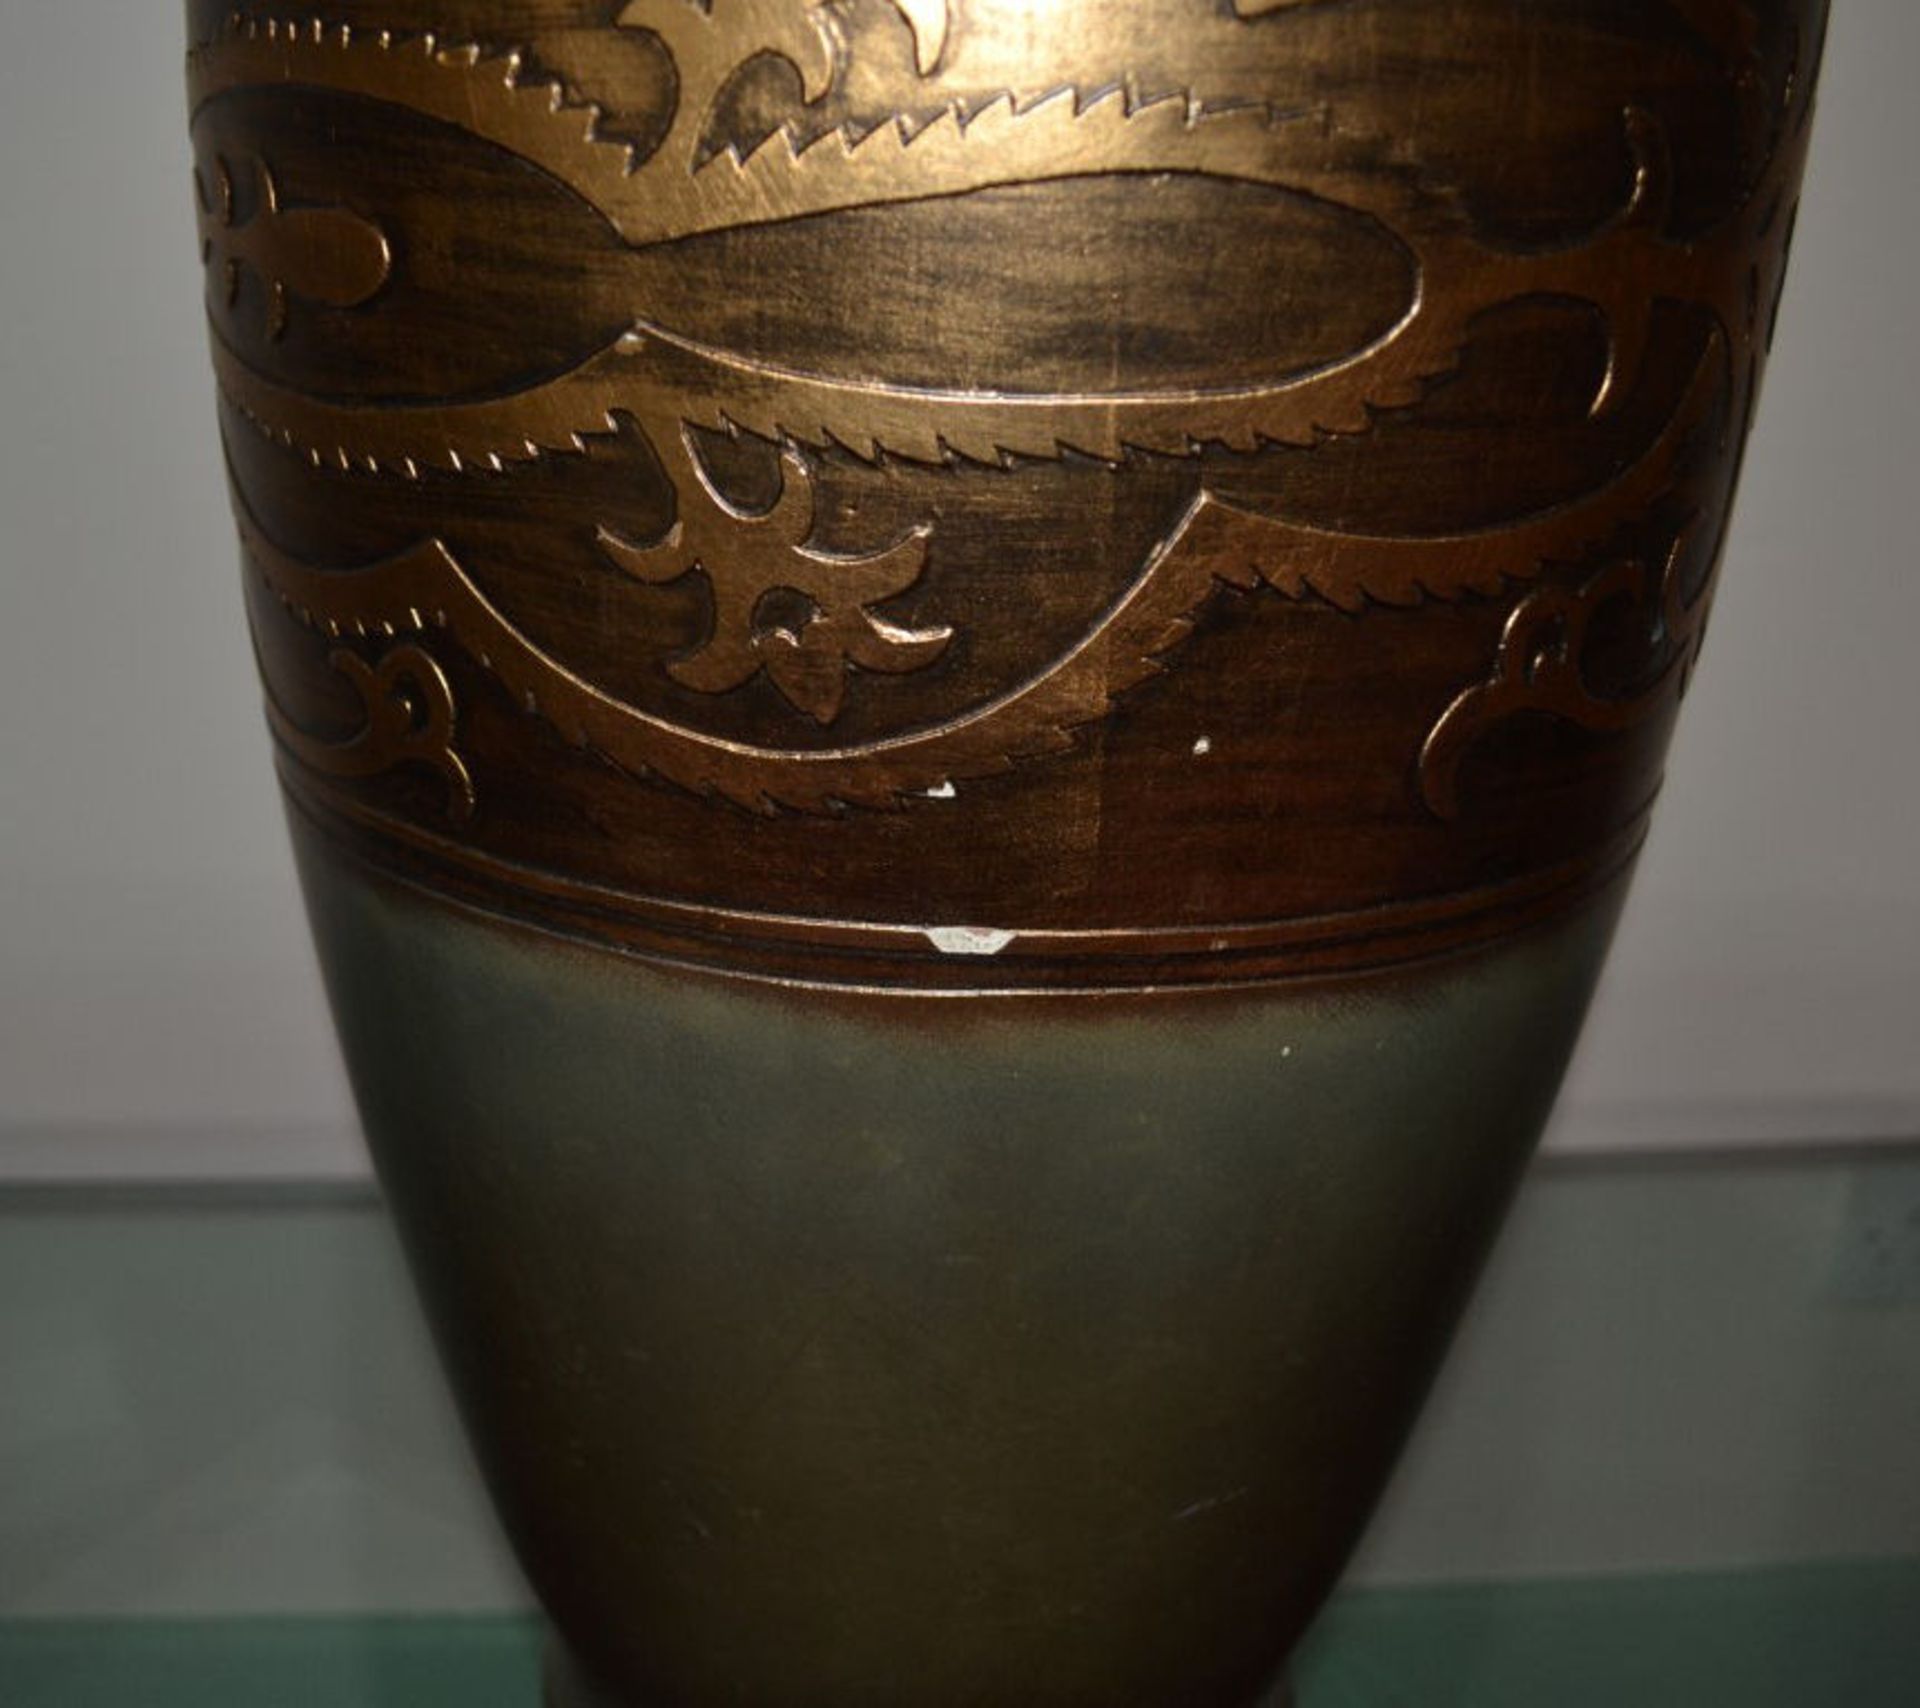 5 Assorted Decorative Vases - See Description For Details - Image 19 of 19